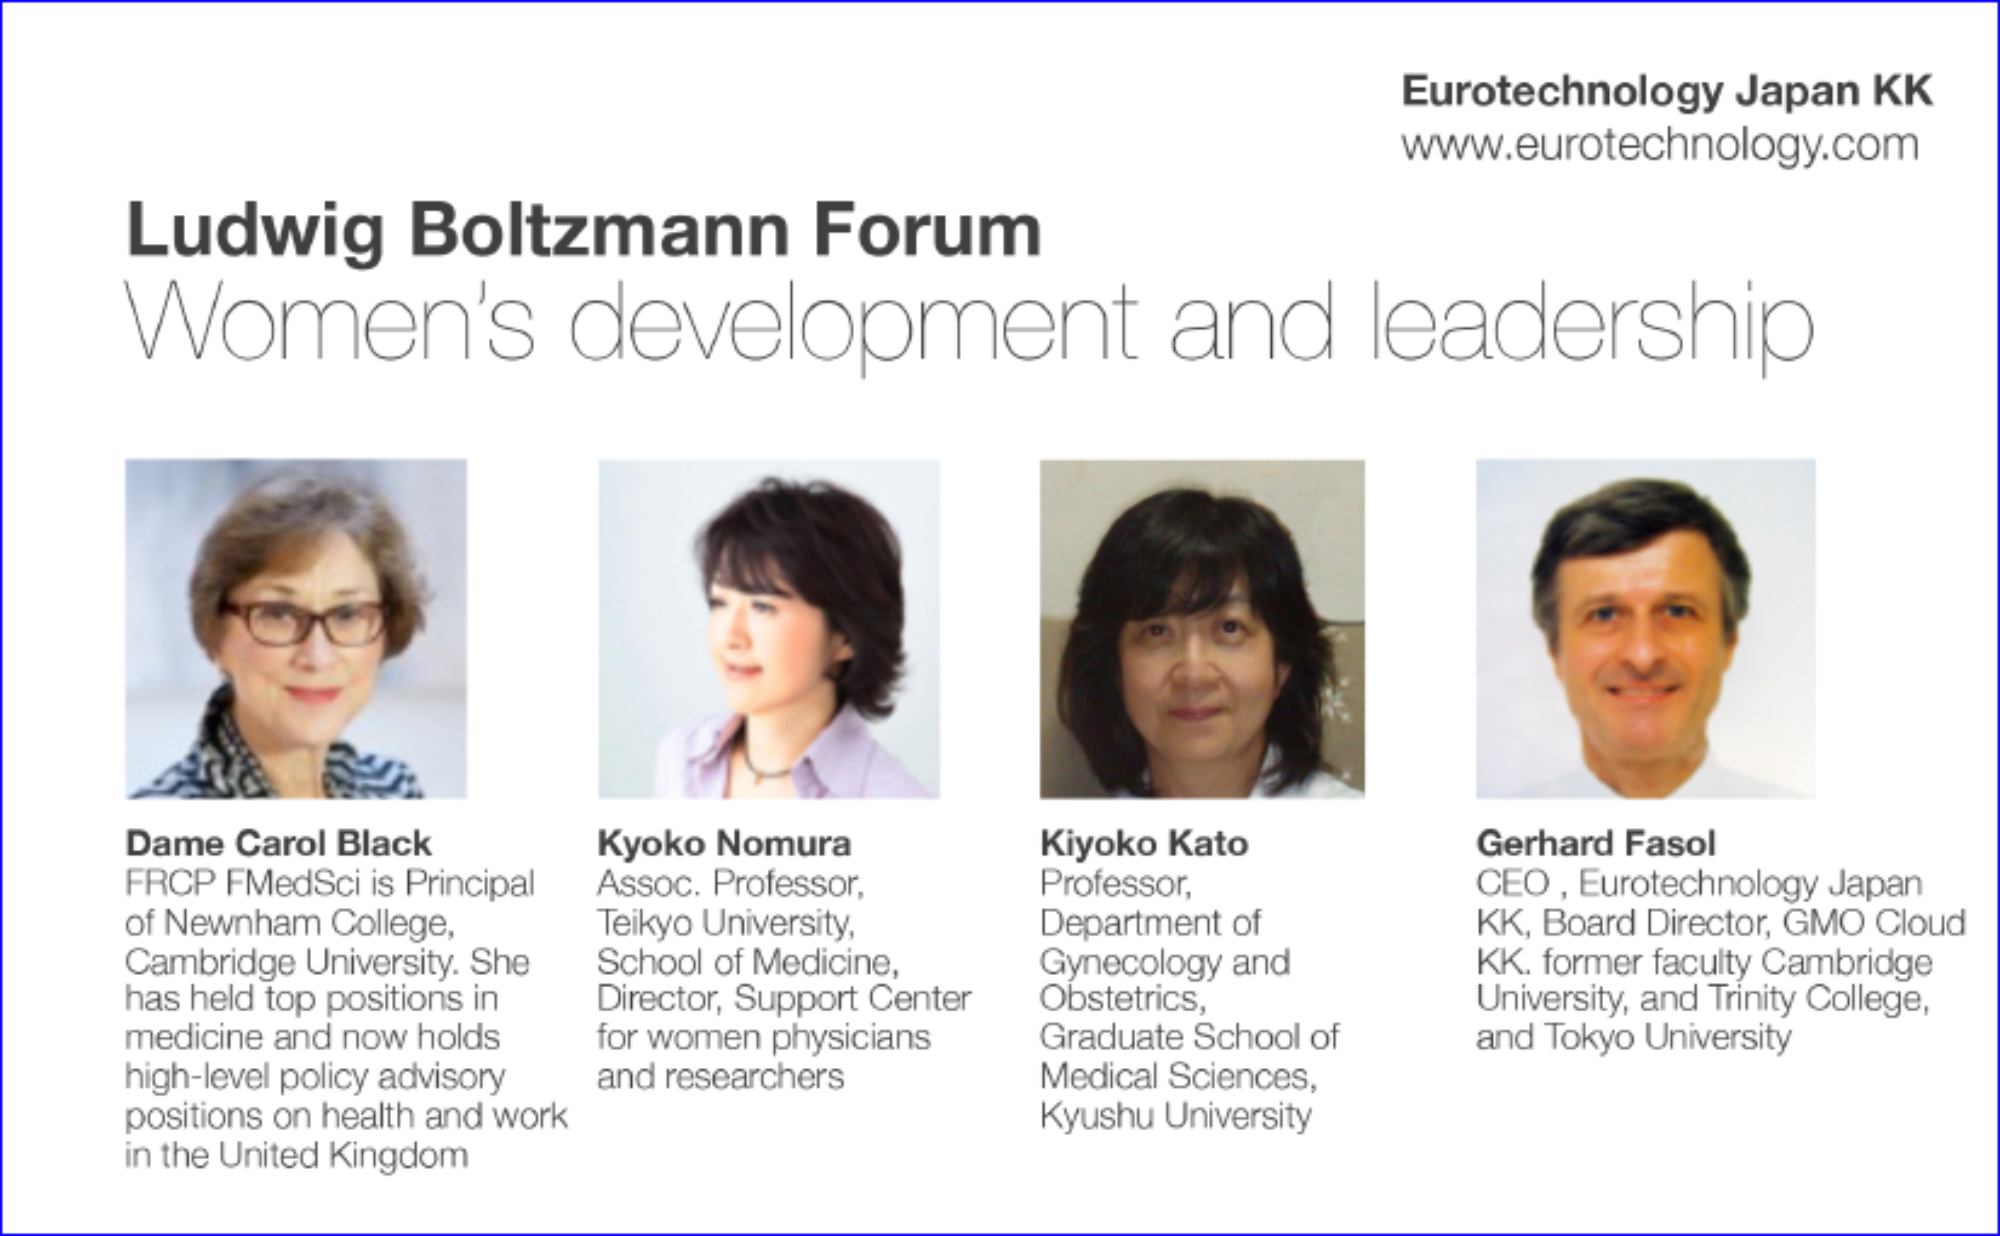 Ludwig Boltzmann Forum on Women’s development and leadership 16 May 2016